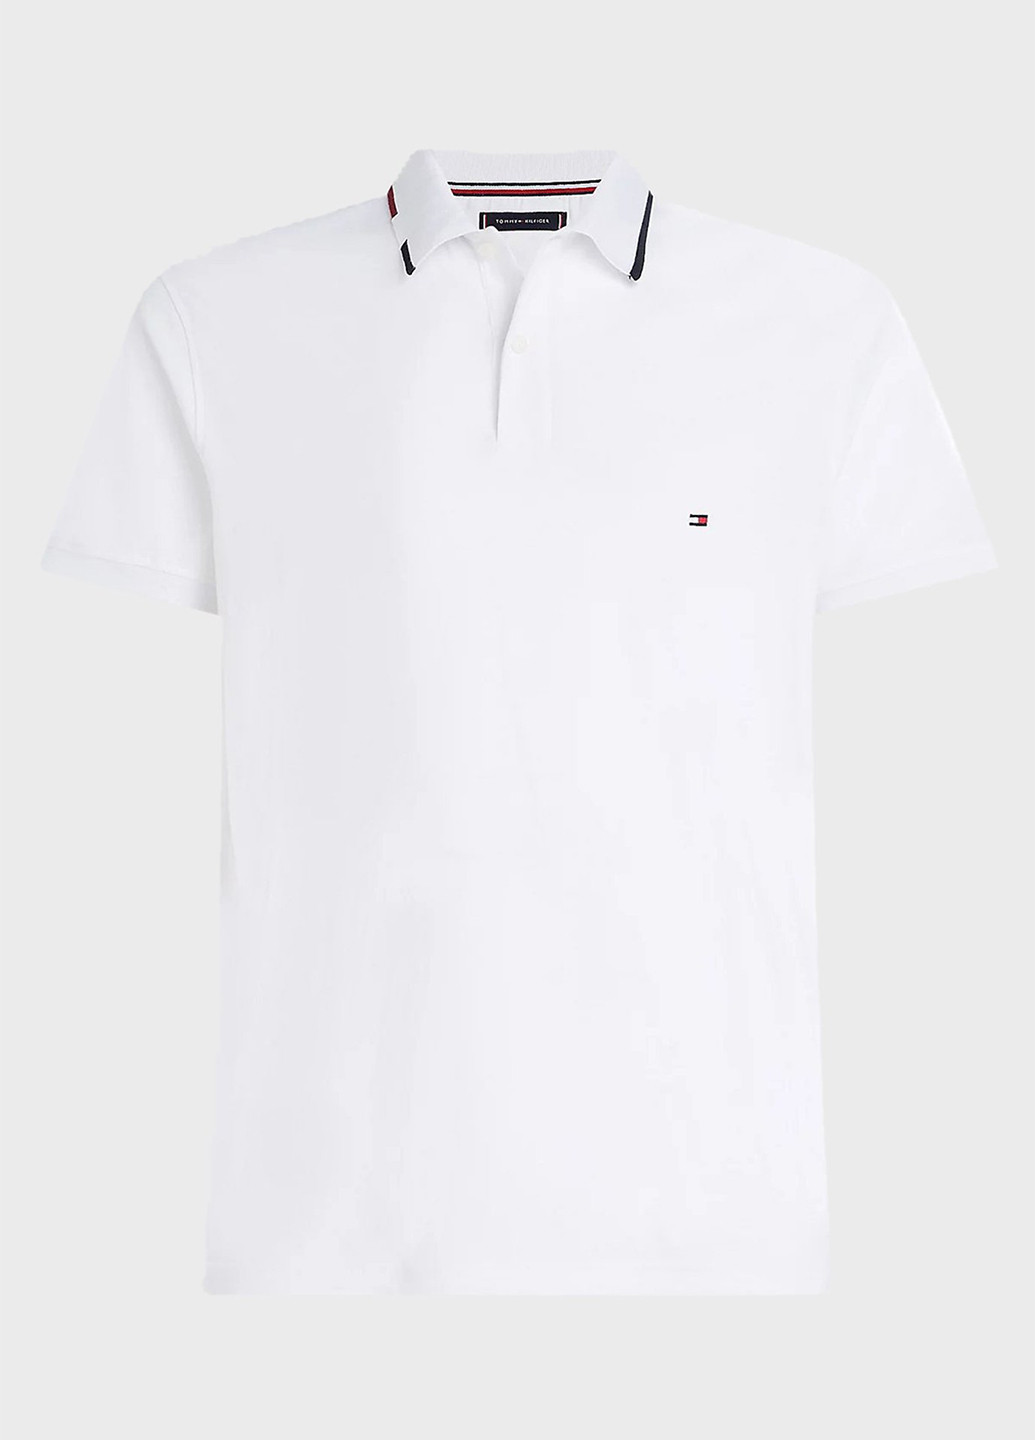 Белая футболка-поло для мужчин Tommy Hilfiger однотонная